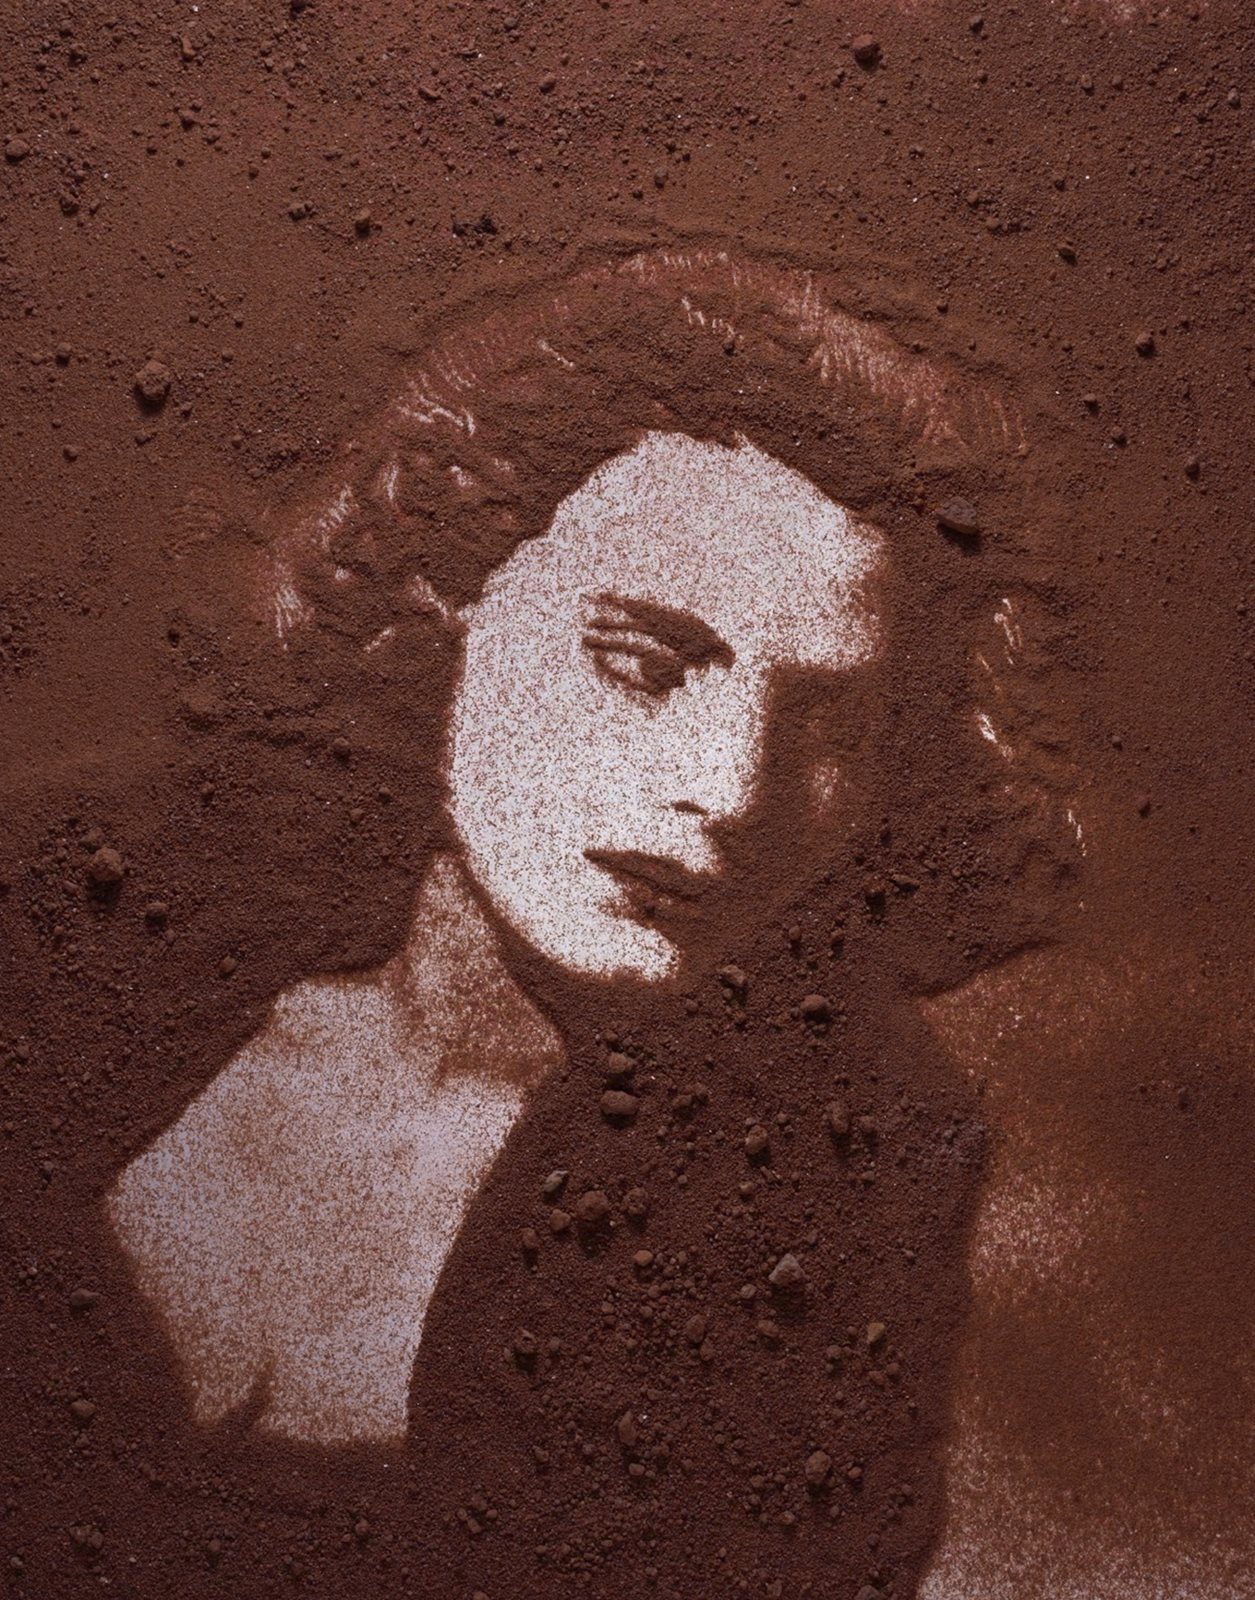 Amália Rodrigues, da série Pictures of Soil